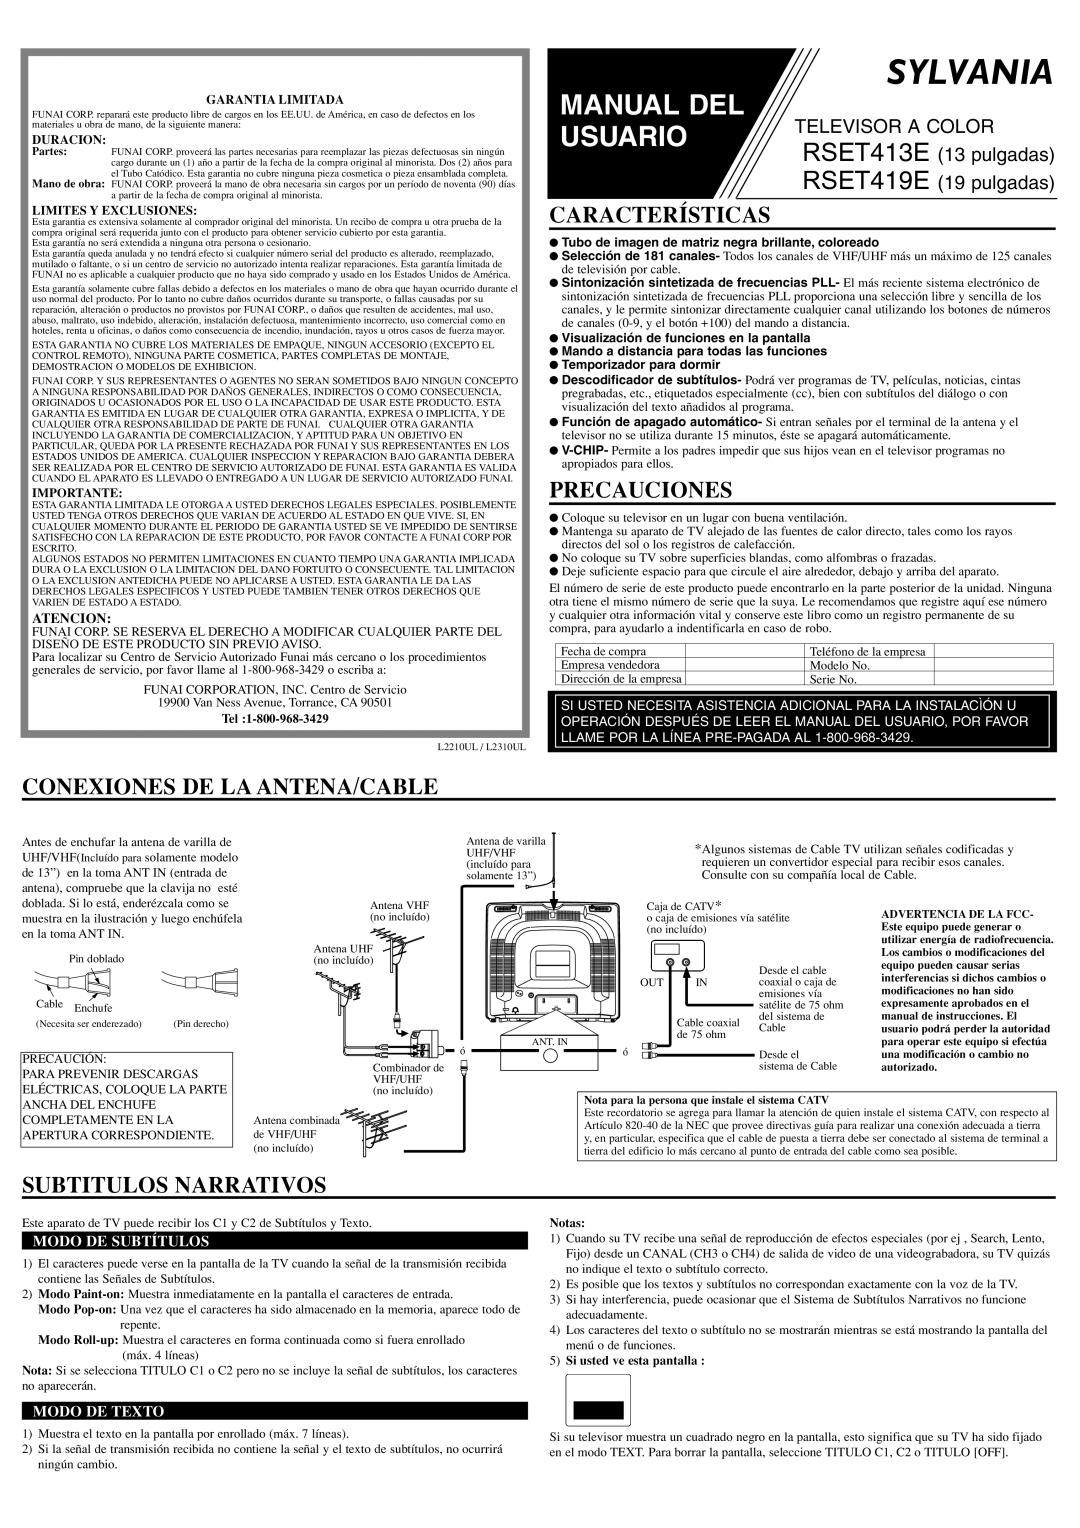 Sylvania RSET413E, RSET419E Características, Precauciones, Conexiones De La Antena/Cable, Subtitulos Narrativos, Sylvania 